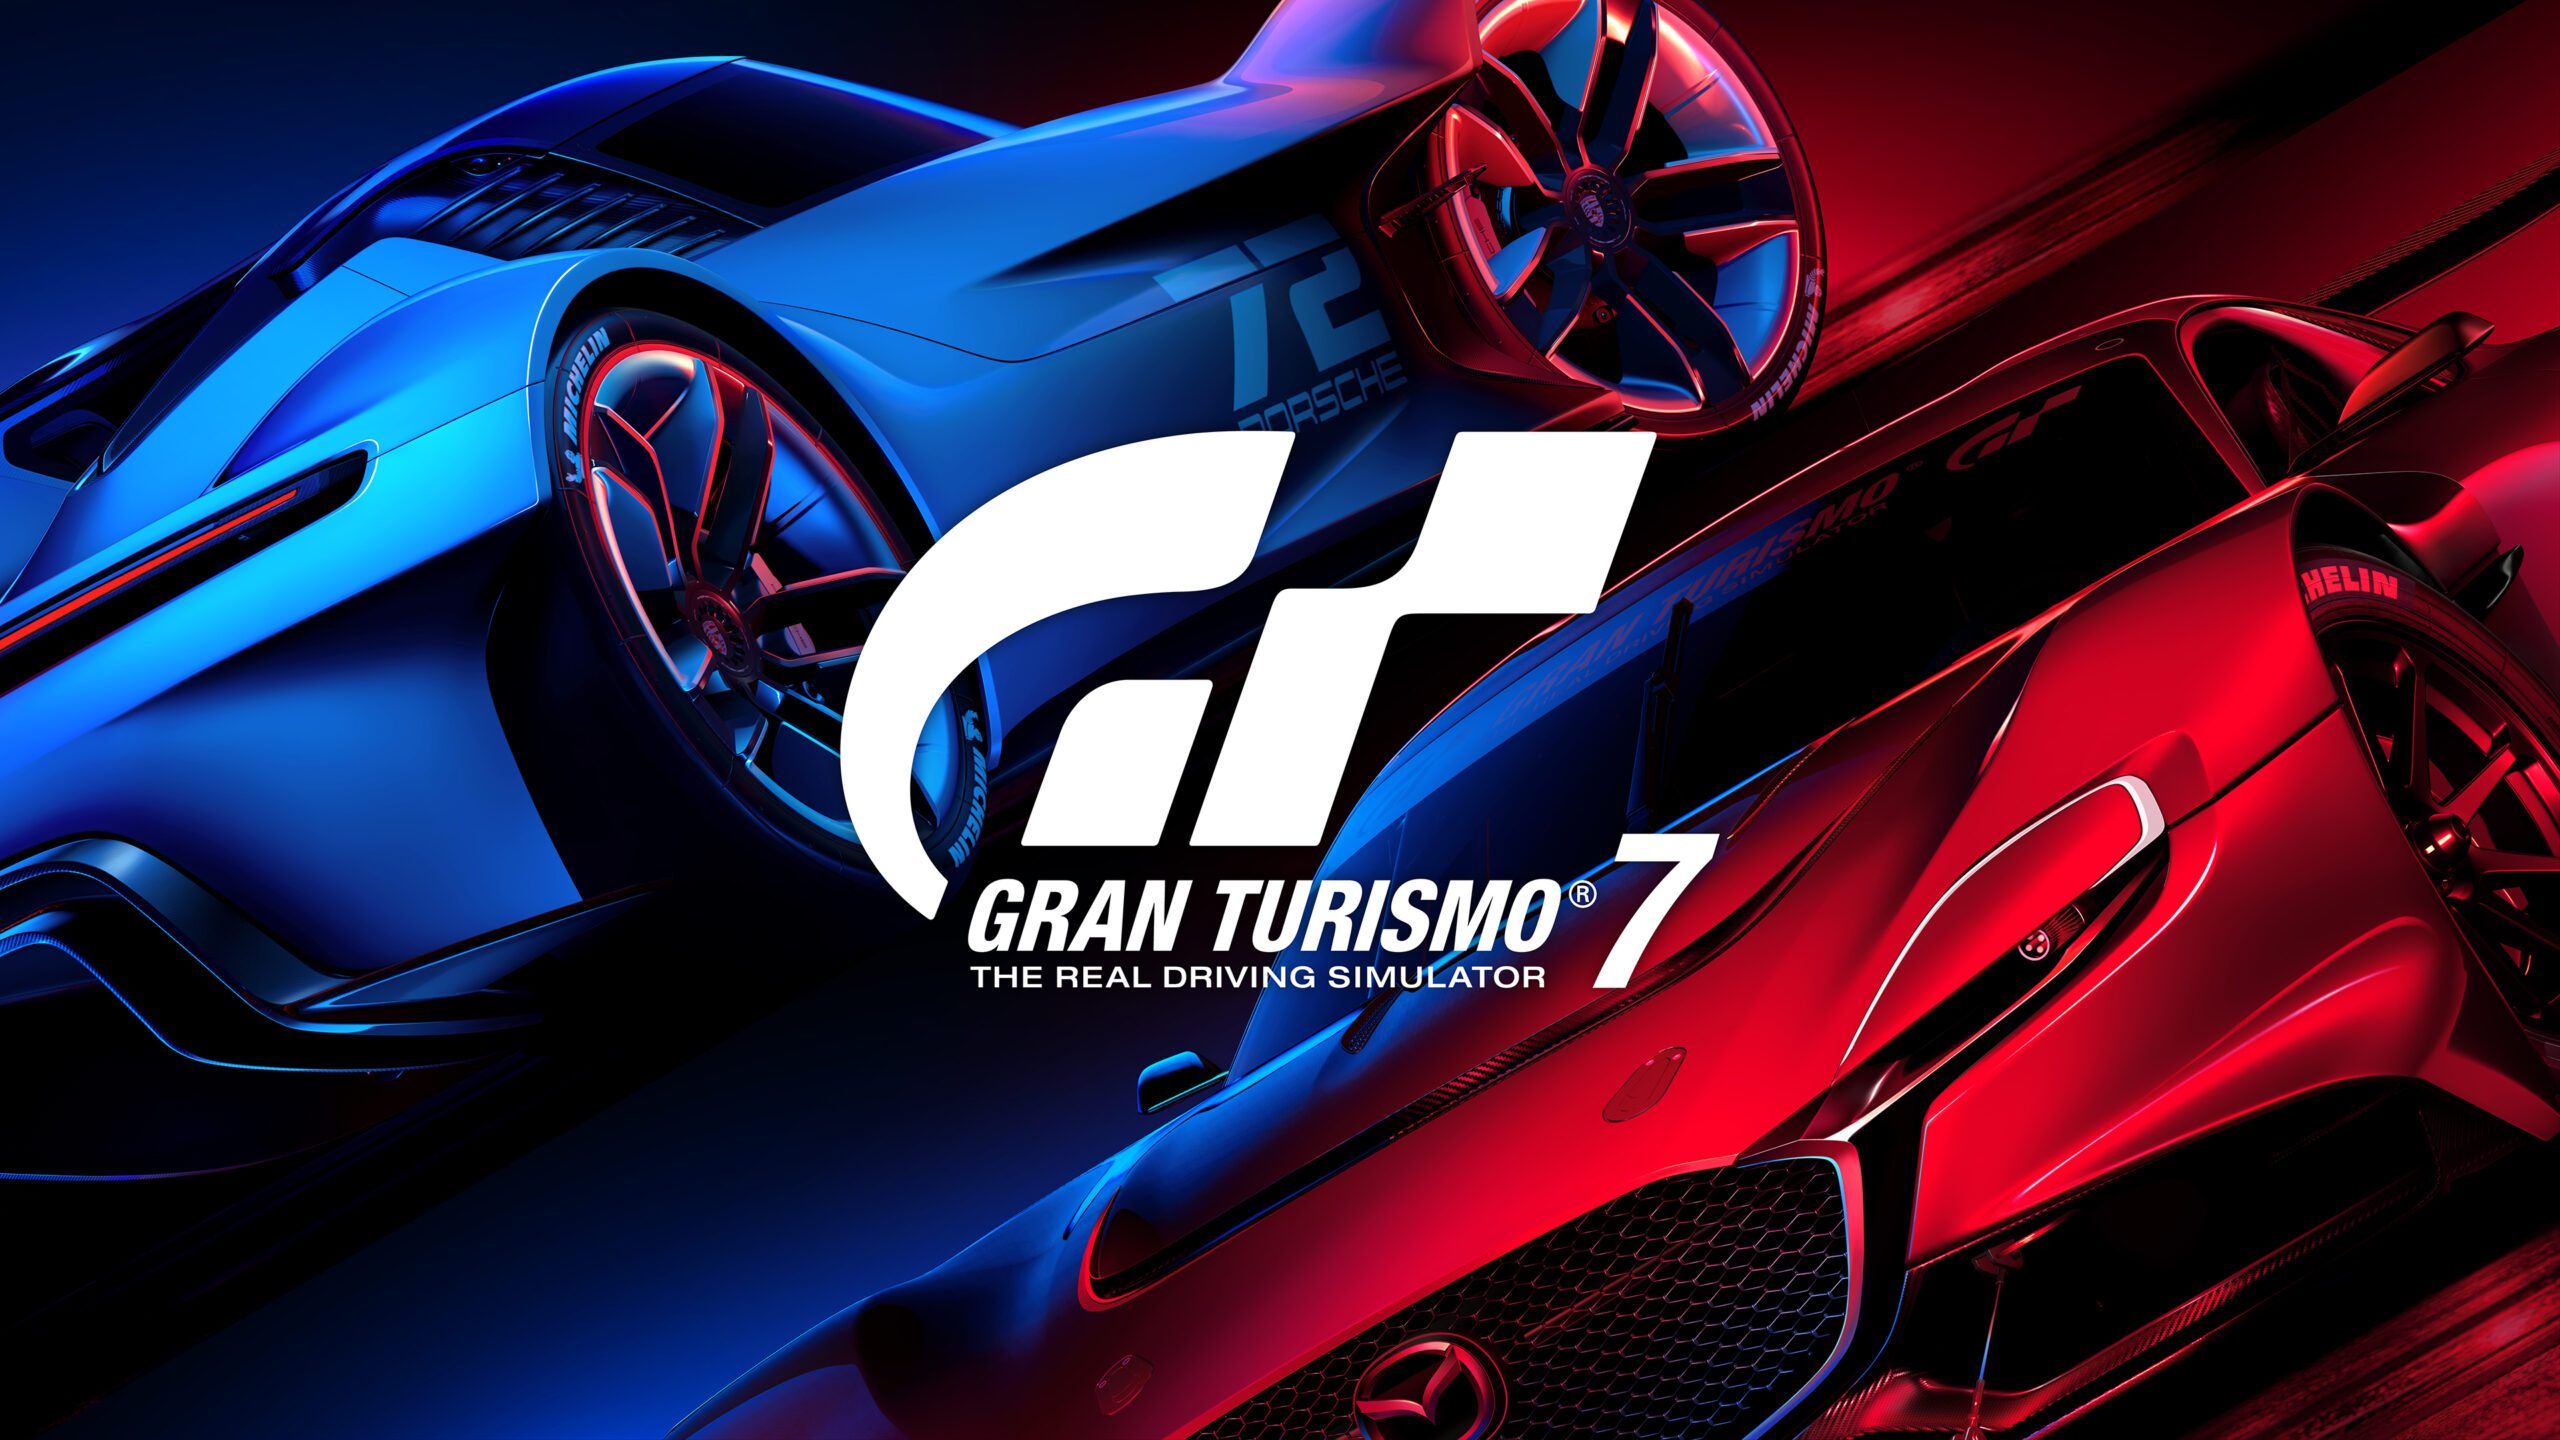 Jogo PS3 - Gran Turismo 5 Platinum (Mídia Física) - FF Games